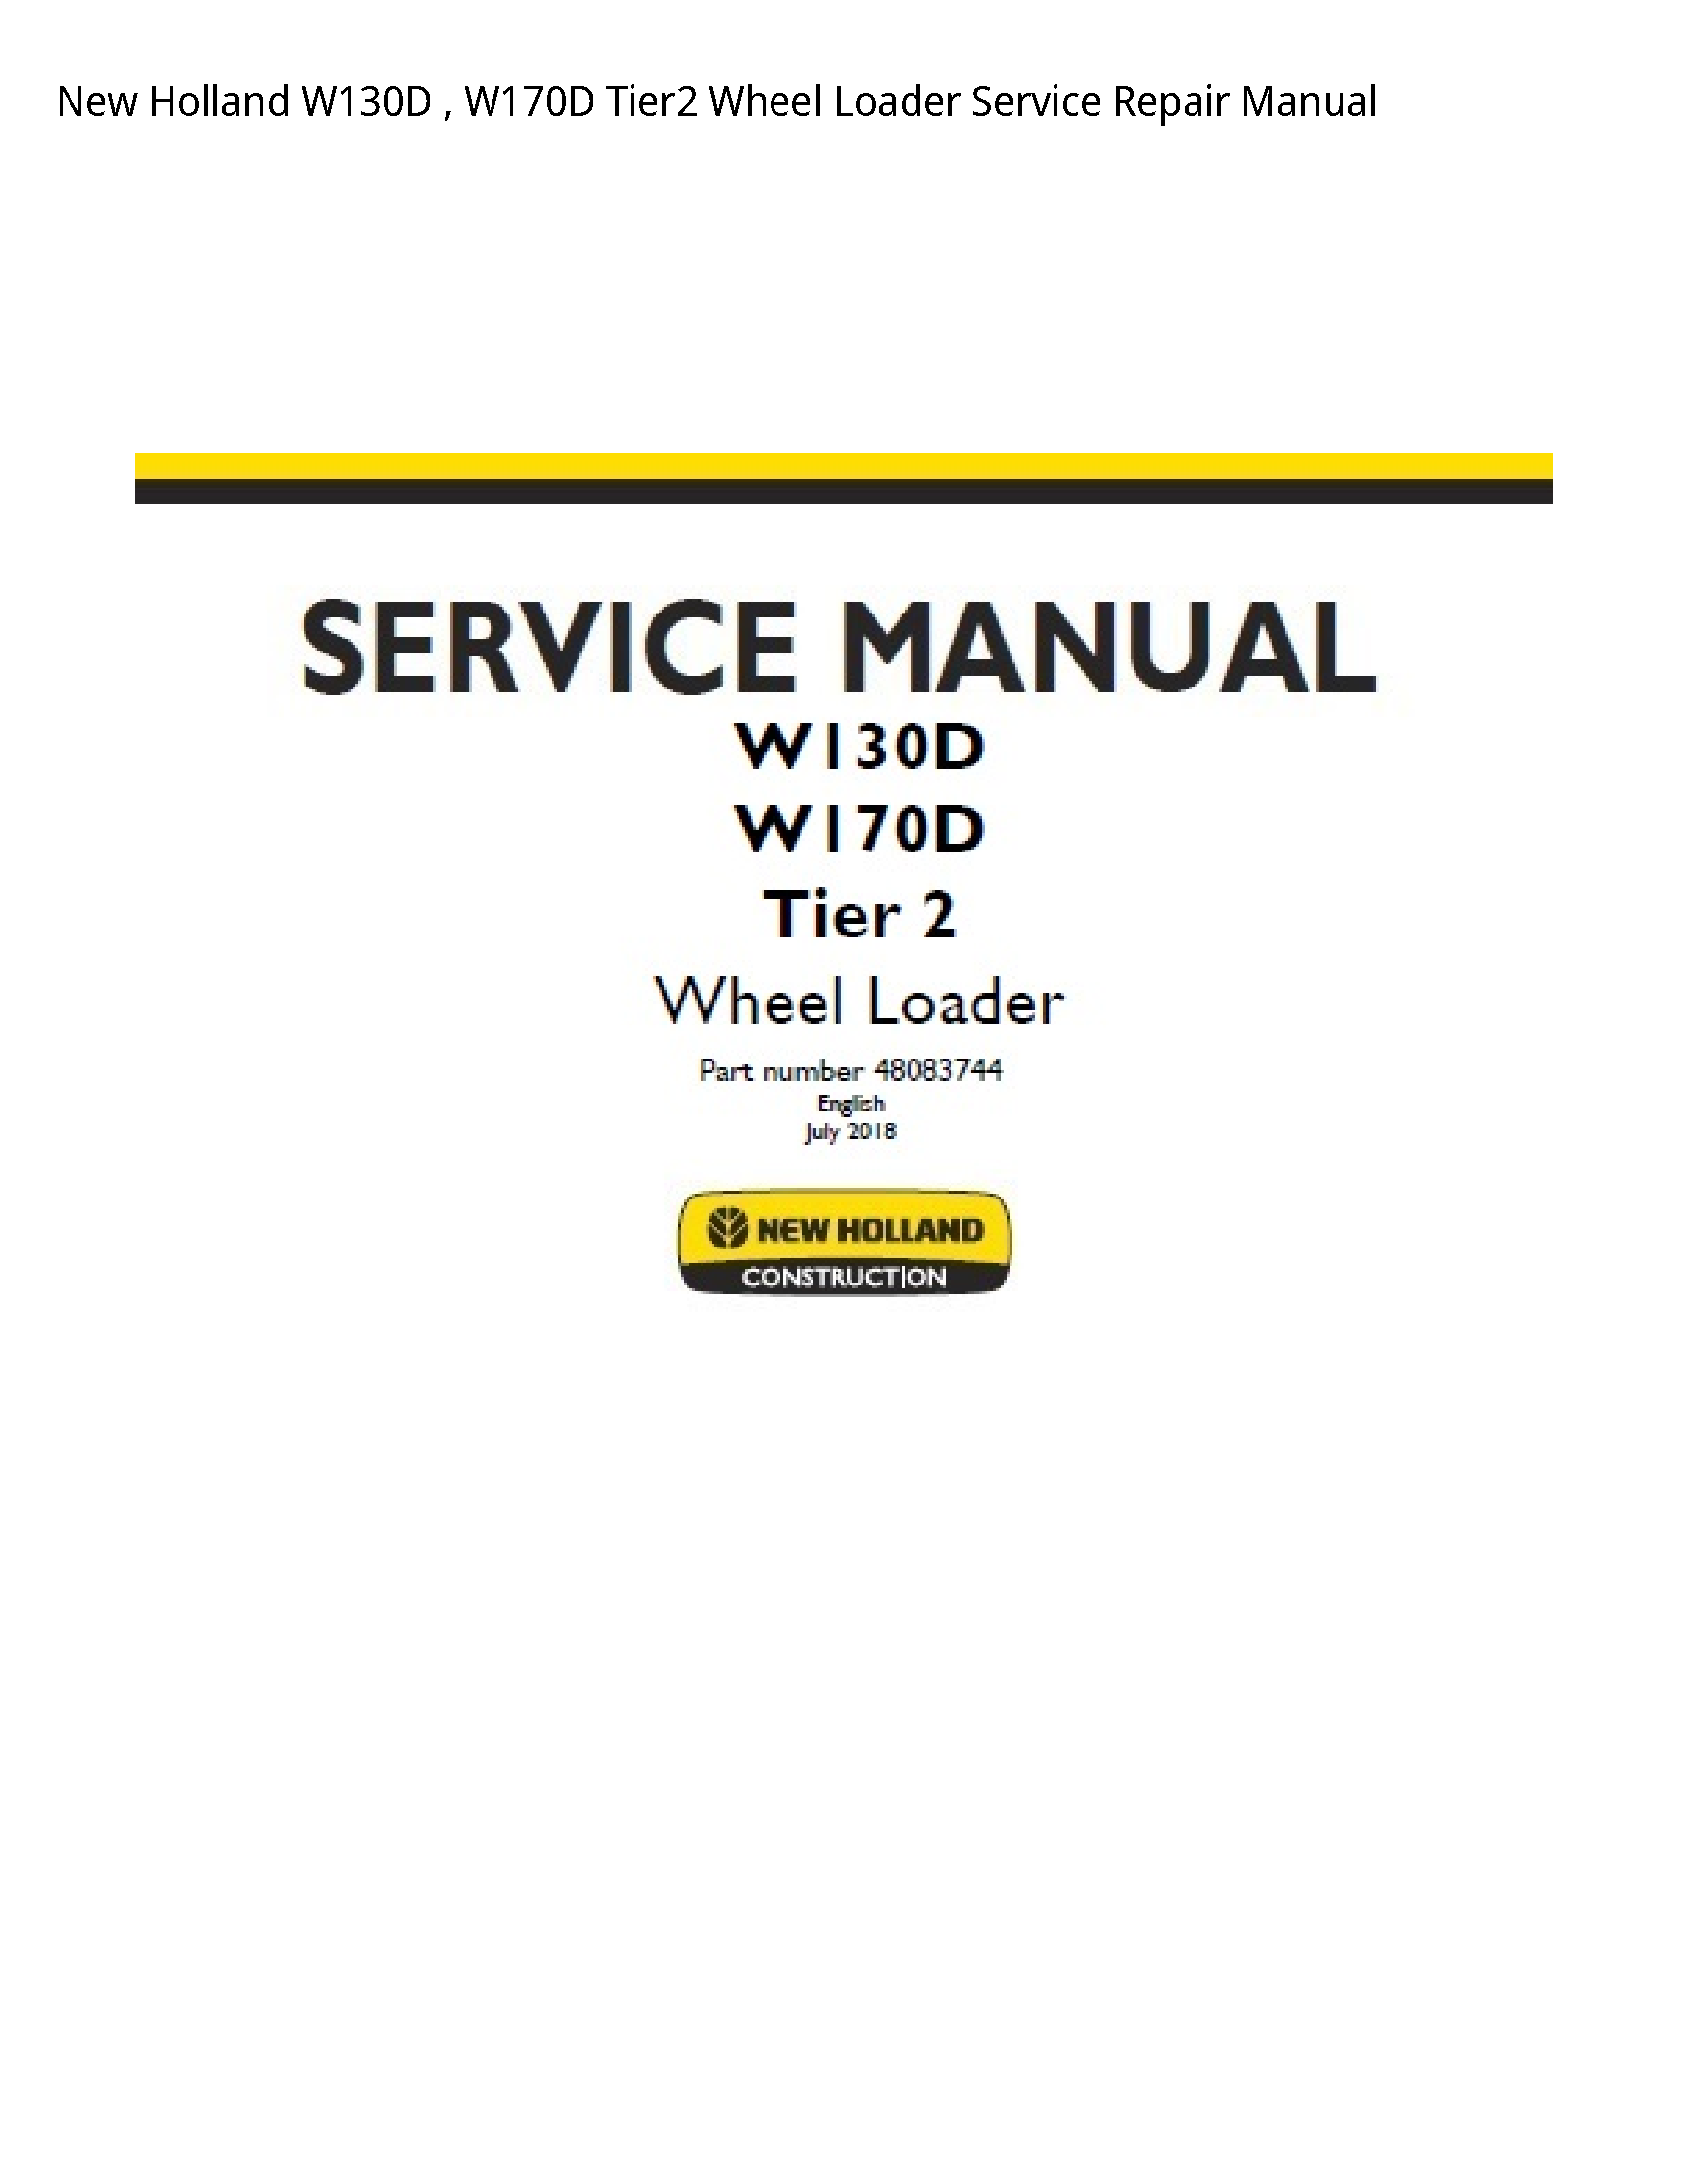 New Holland W130D Wheel Loader manual